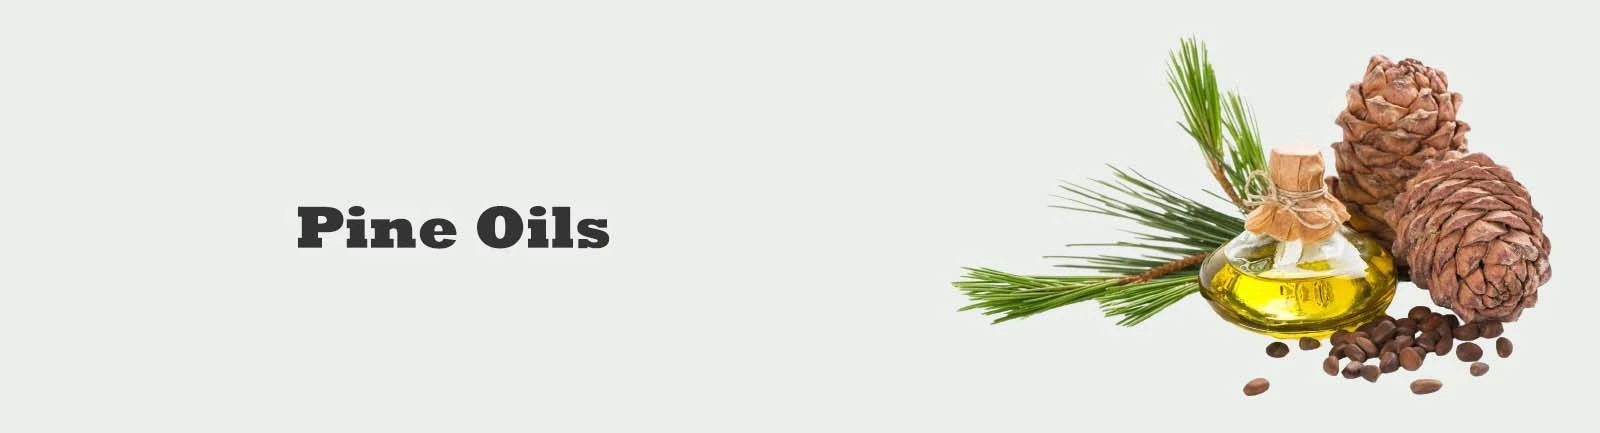 Leading distributors, suppliers, retailer of Pine Oils in Australia & India